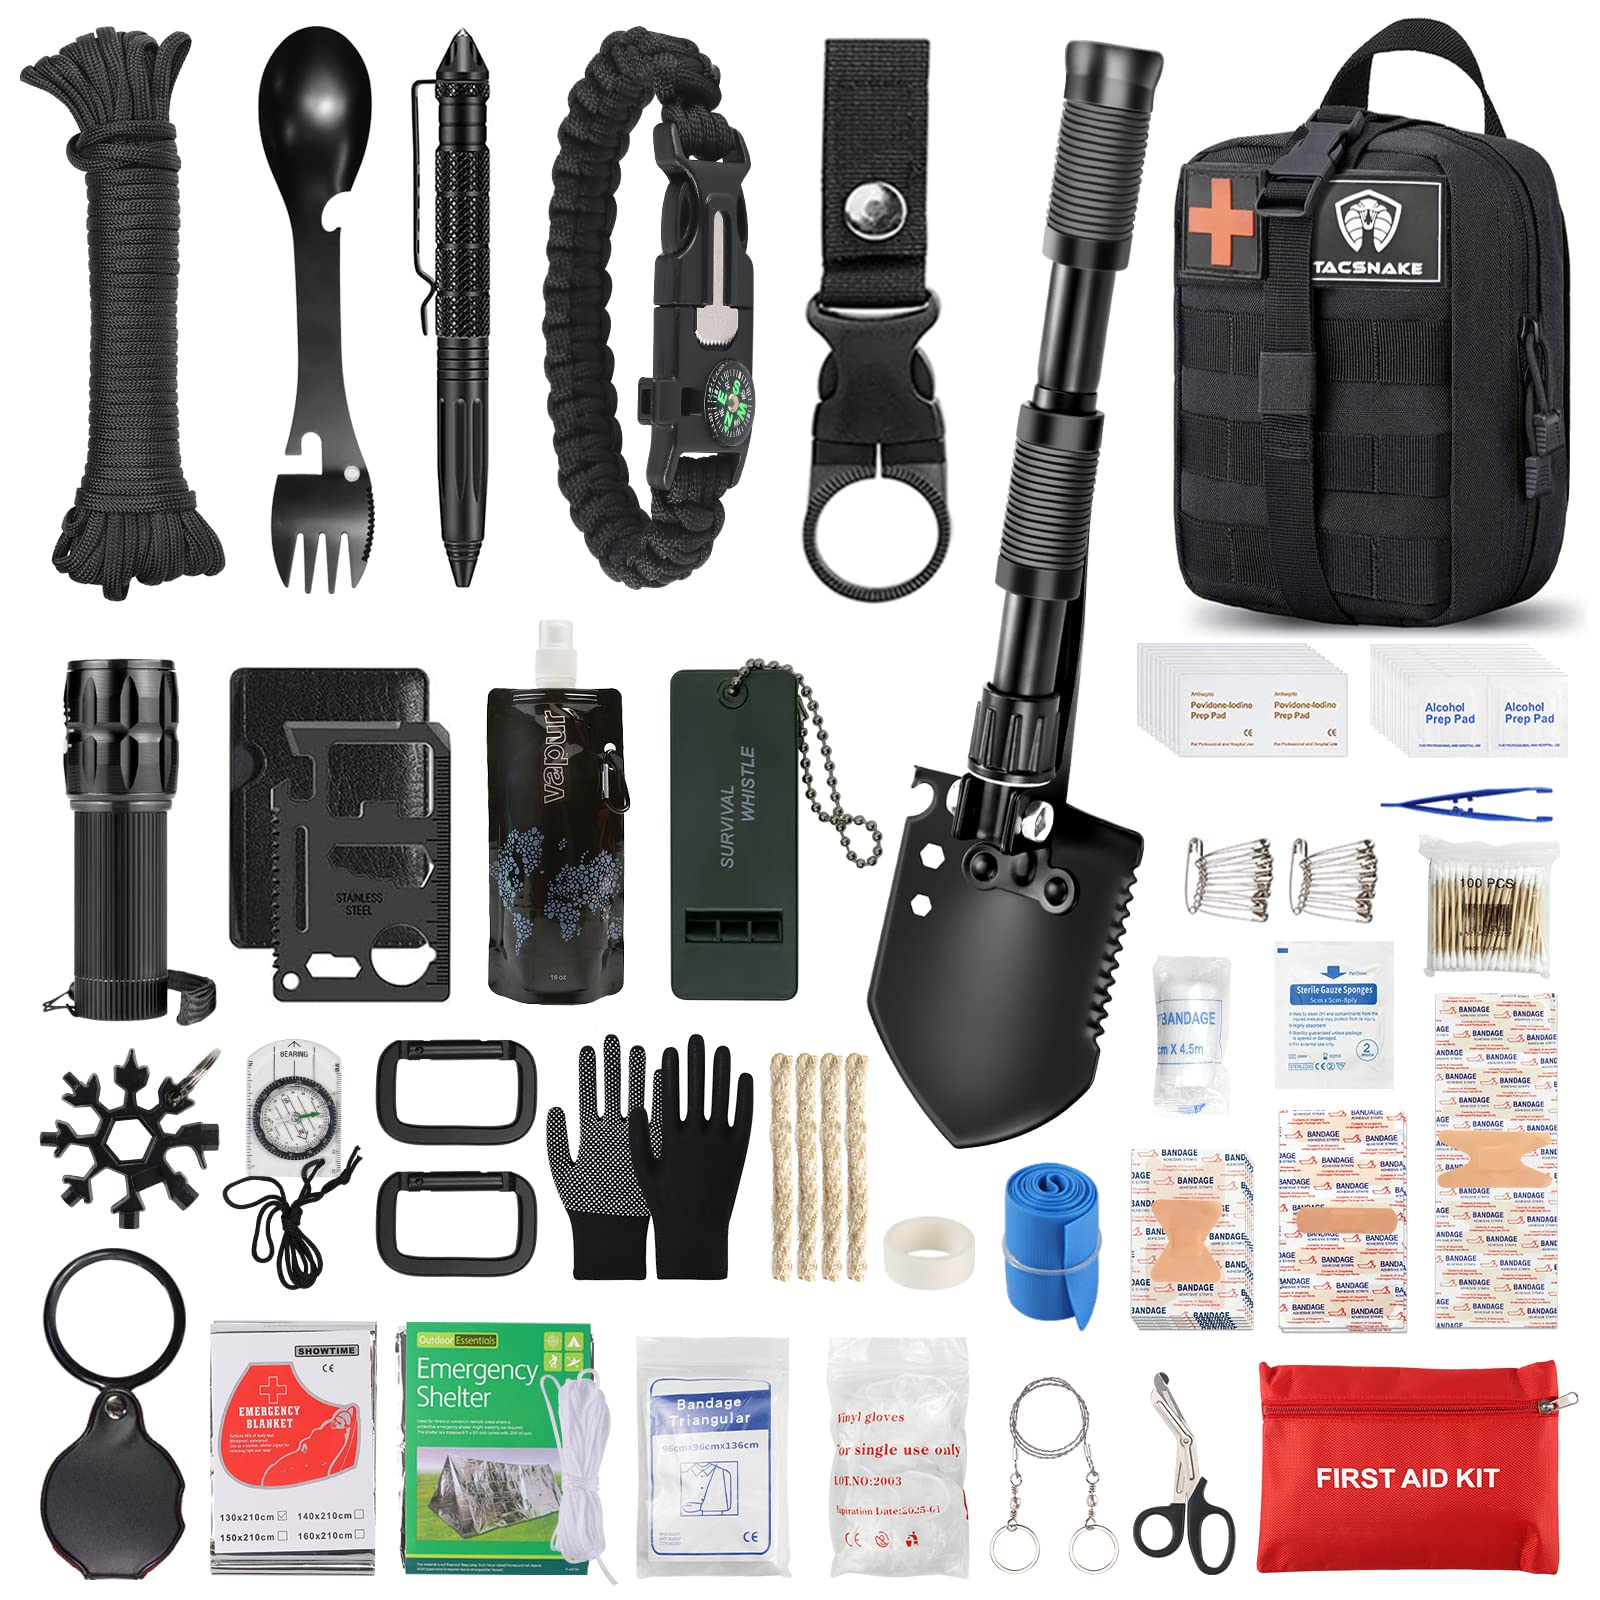 Emergency Survival Kits & First Aid Kit, Multi-Tools Survival Gear